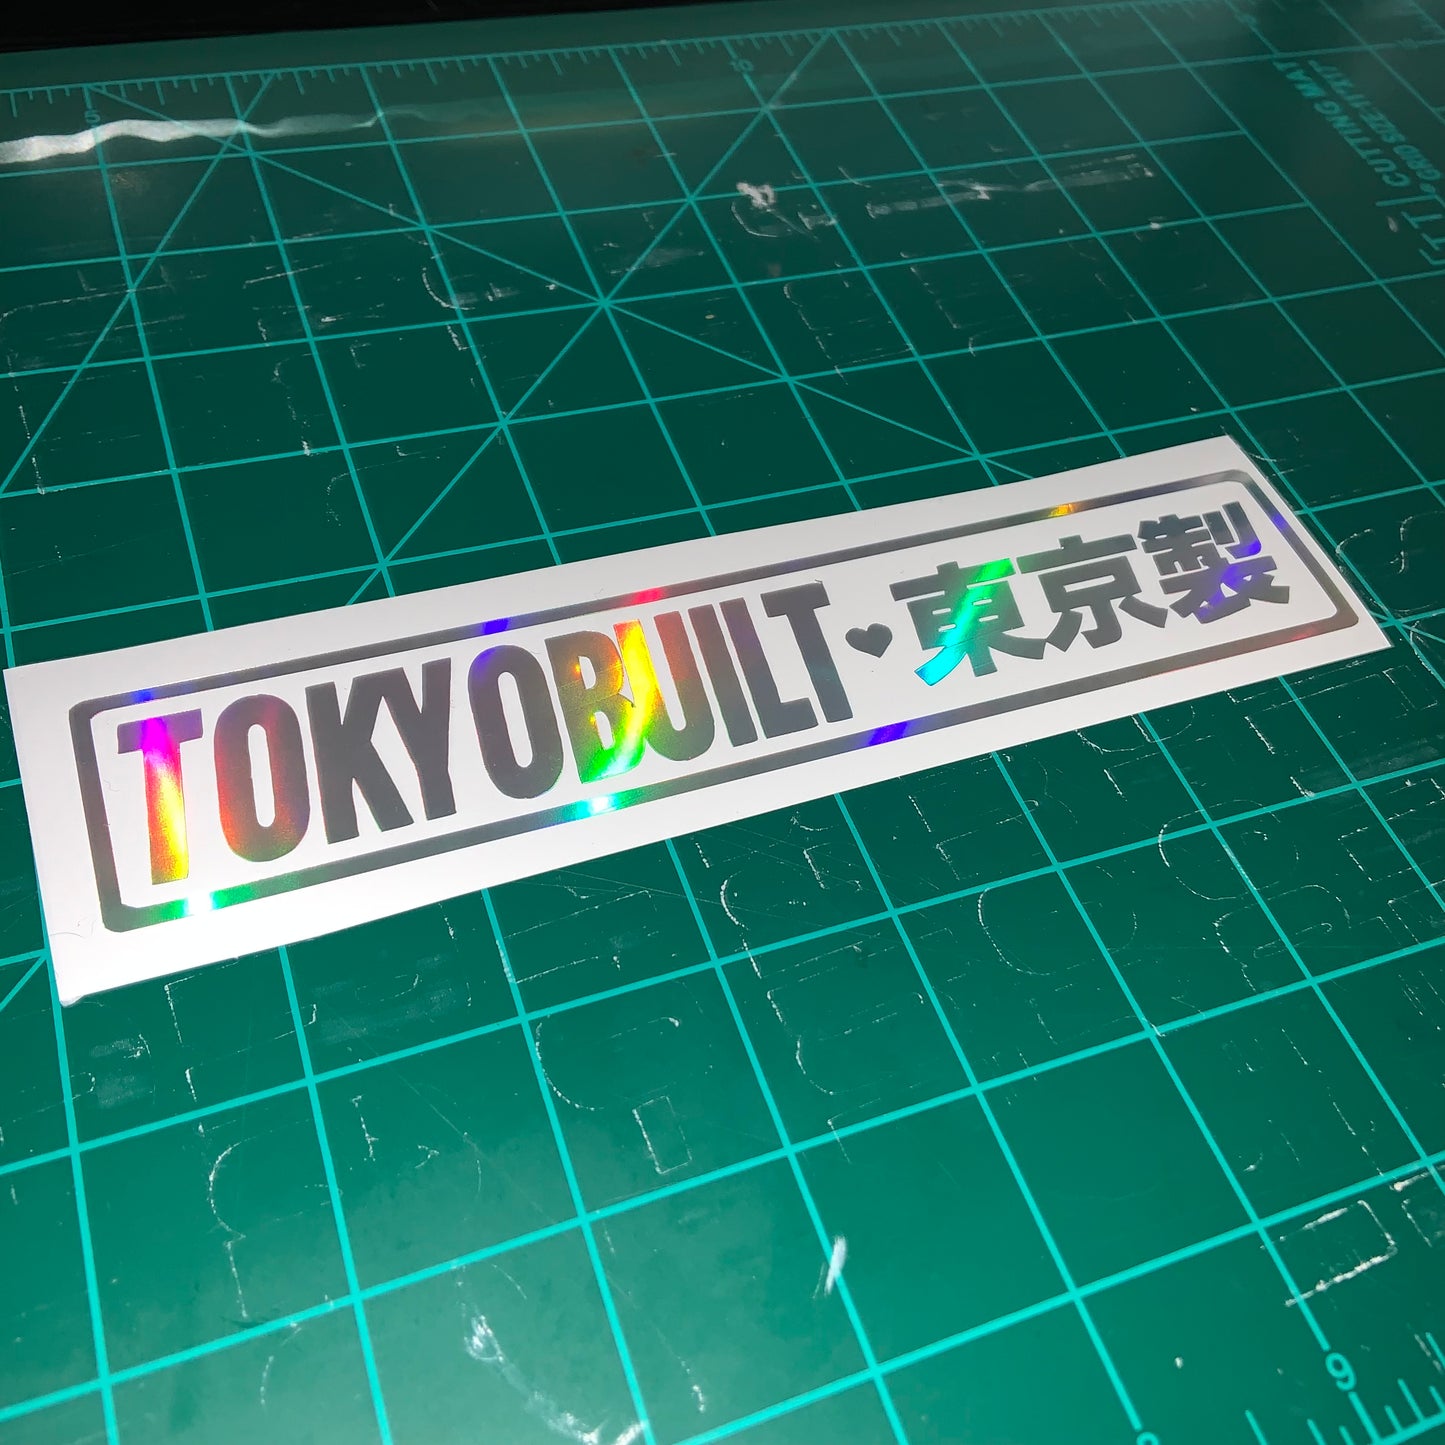 Tokyobuilt 東京製 Vinyl Sticker